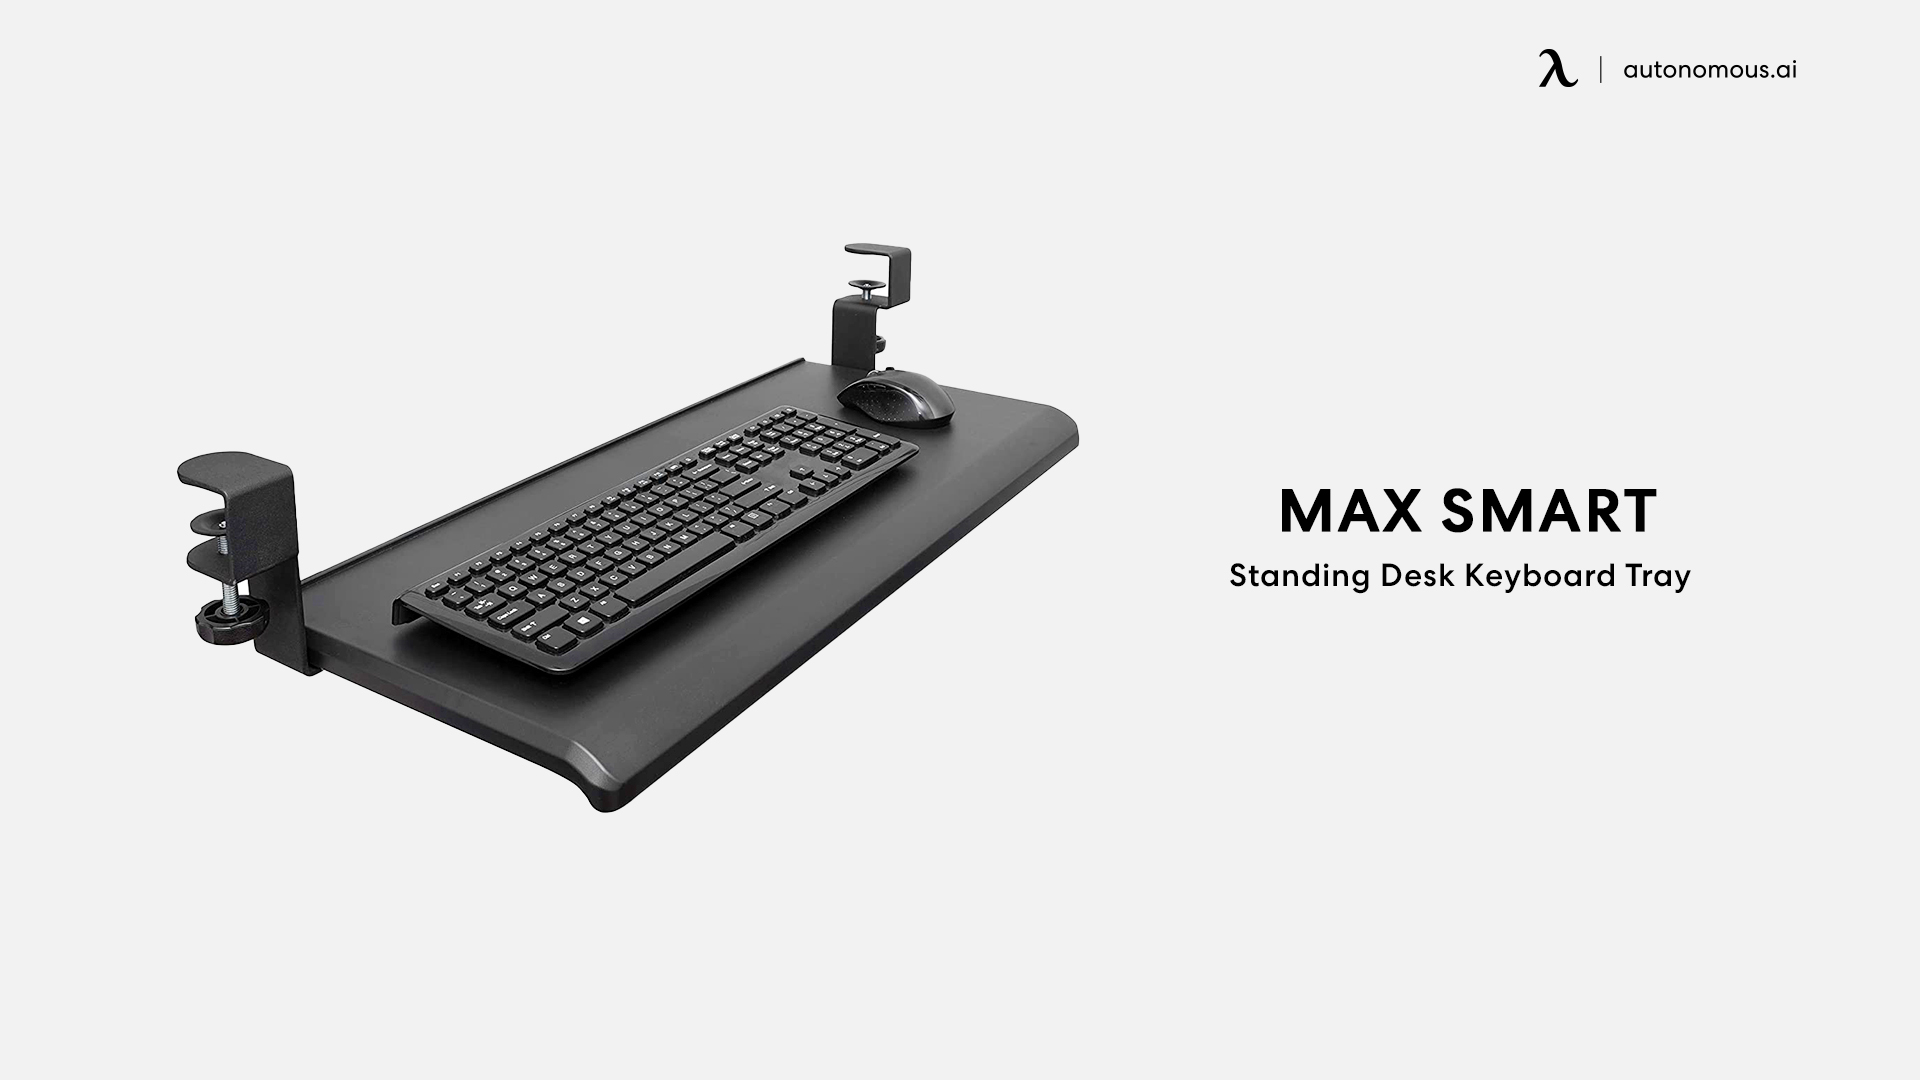 Max Smart Standing Desk Keyboard Tray